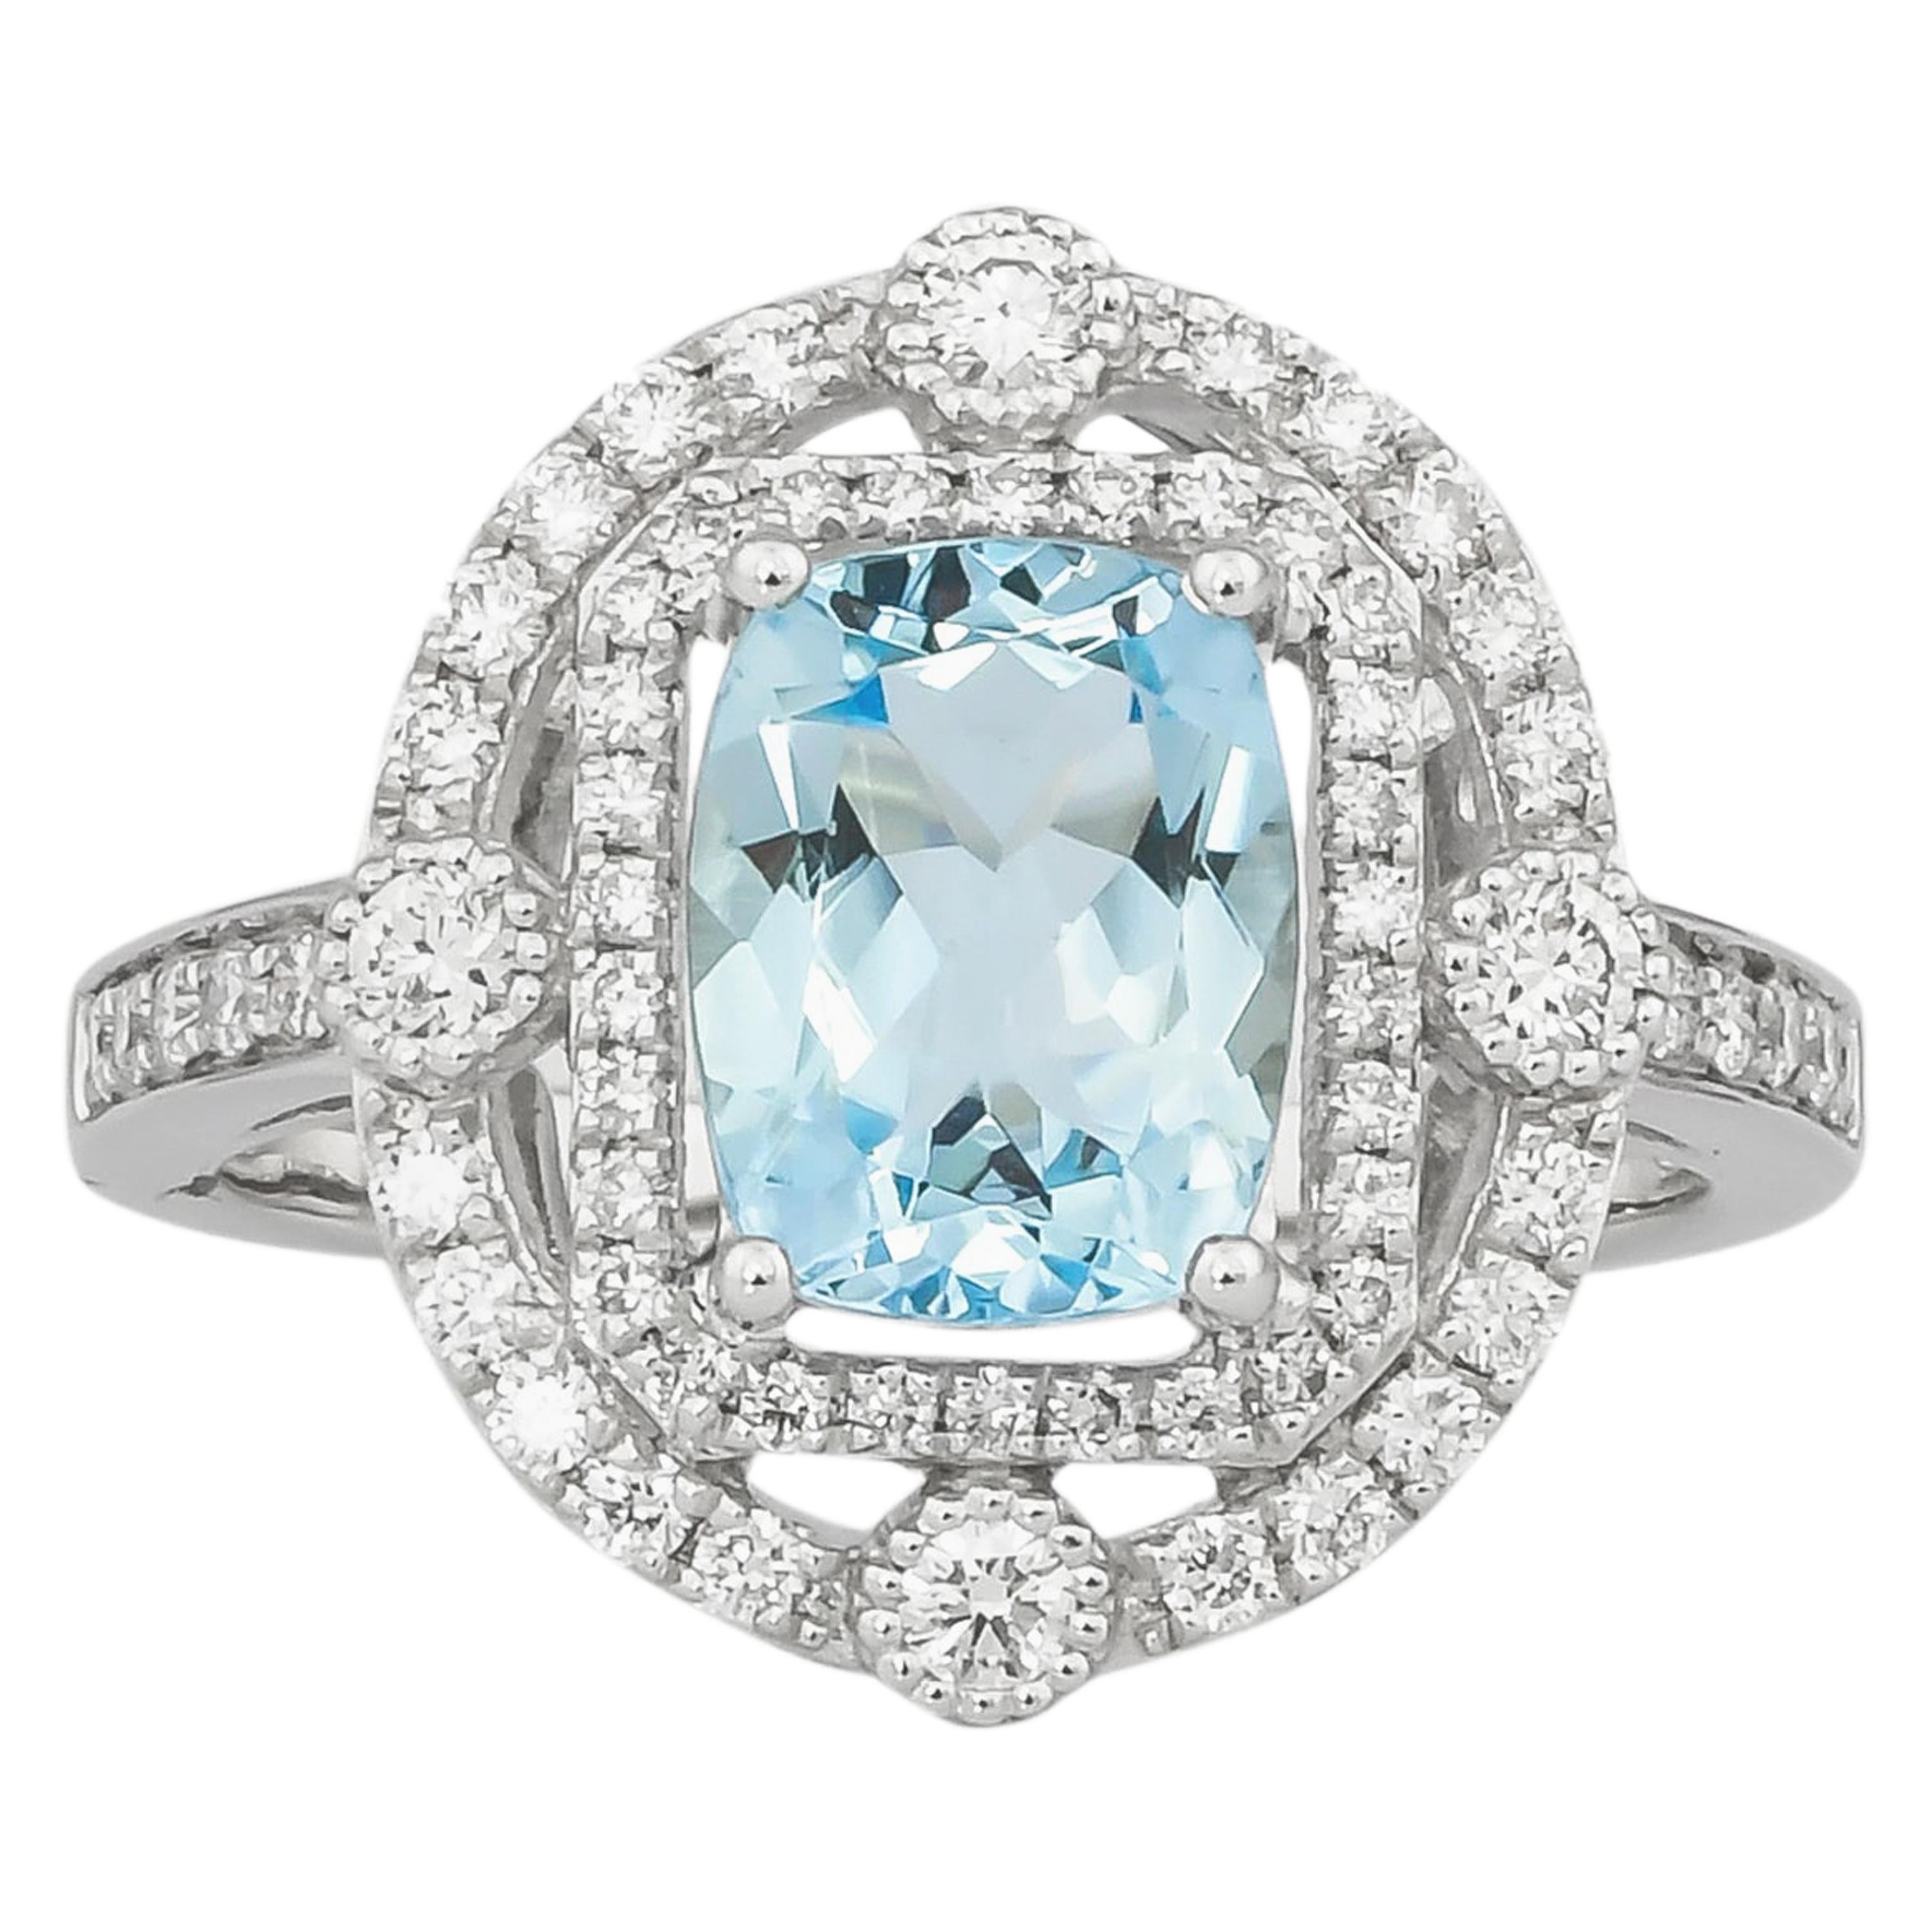 1.9 Carat Aquamarine and Diamond Ring in 18 Karat White Gold For Sale